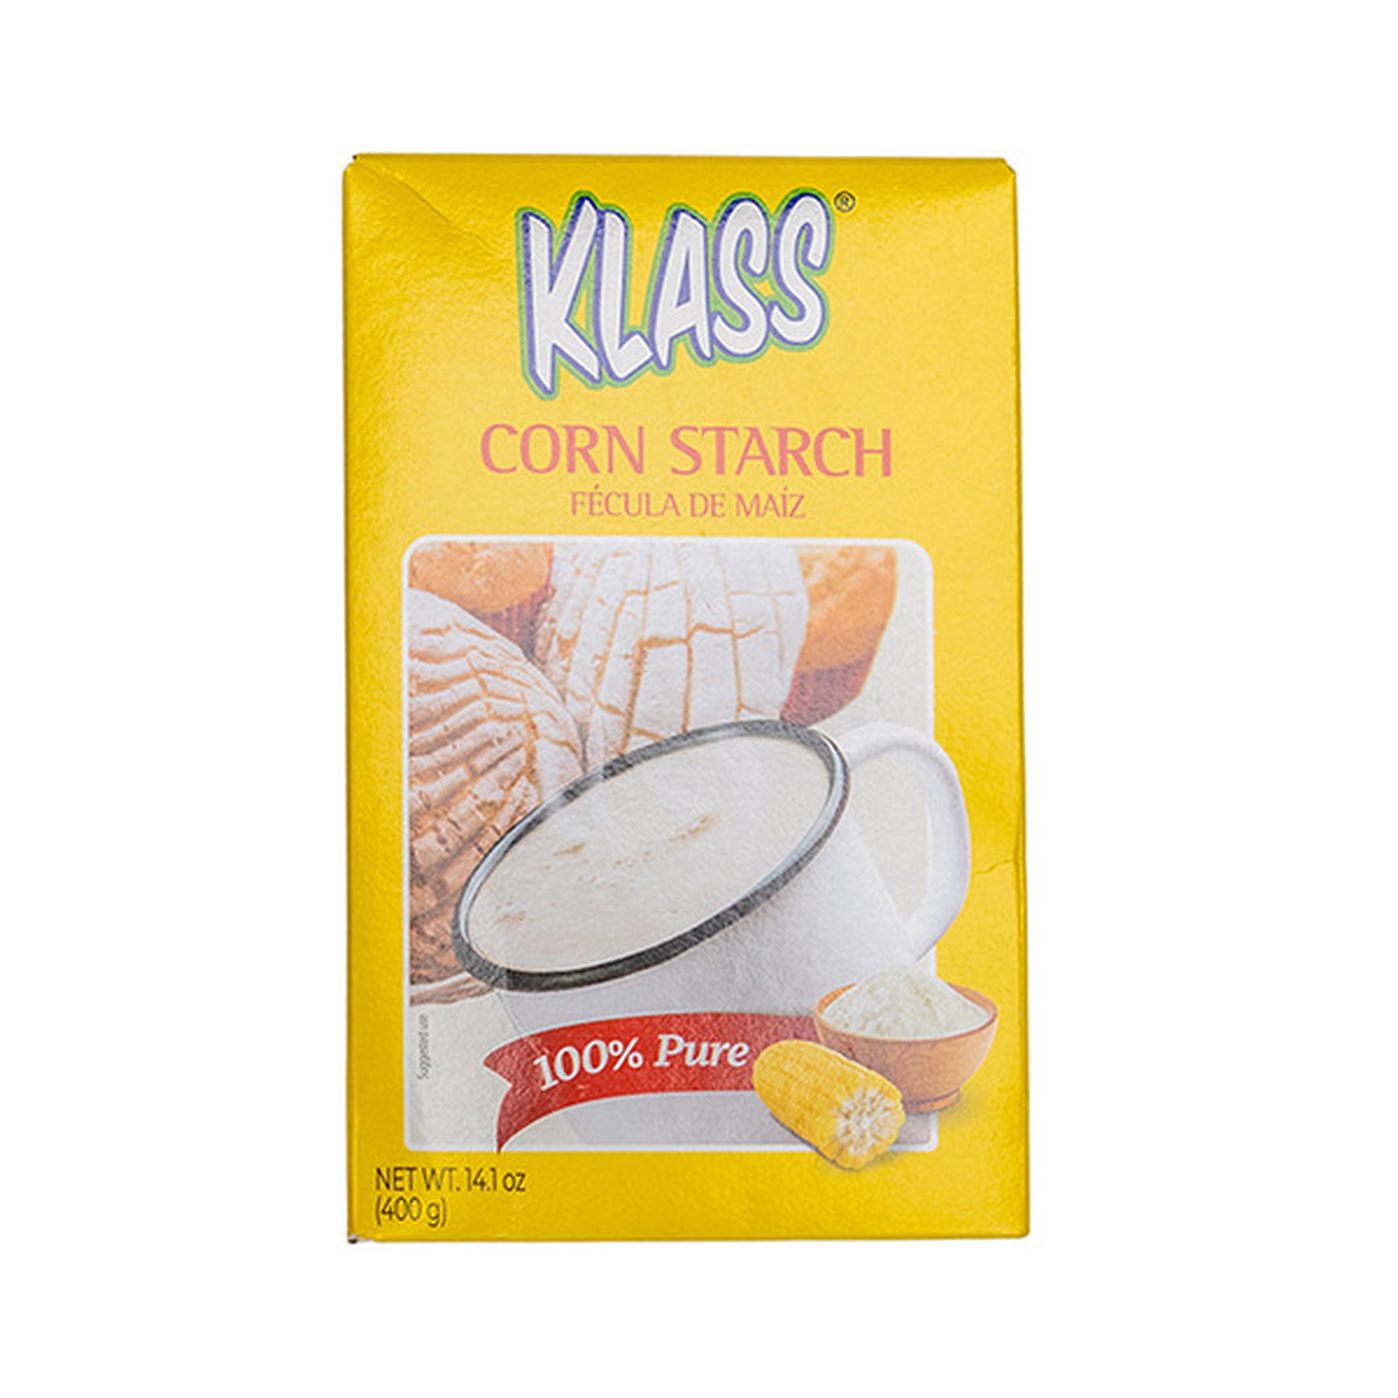 Klass Corn Starch (14 oz) Delivery or Pickup Near Me - Instacart